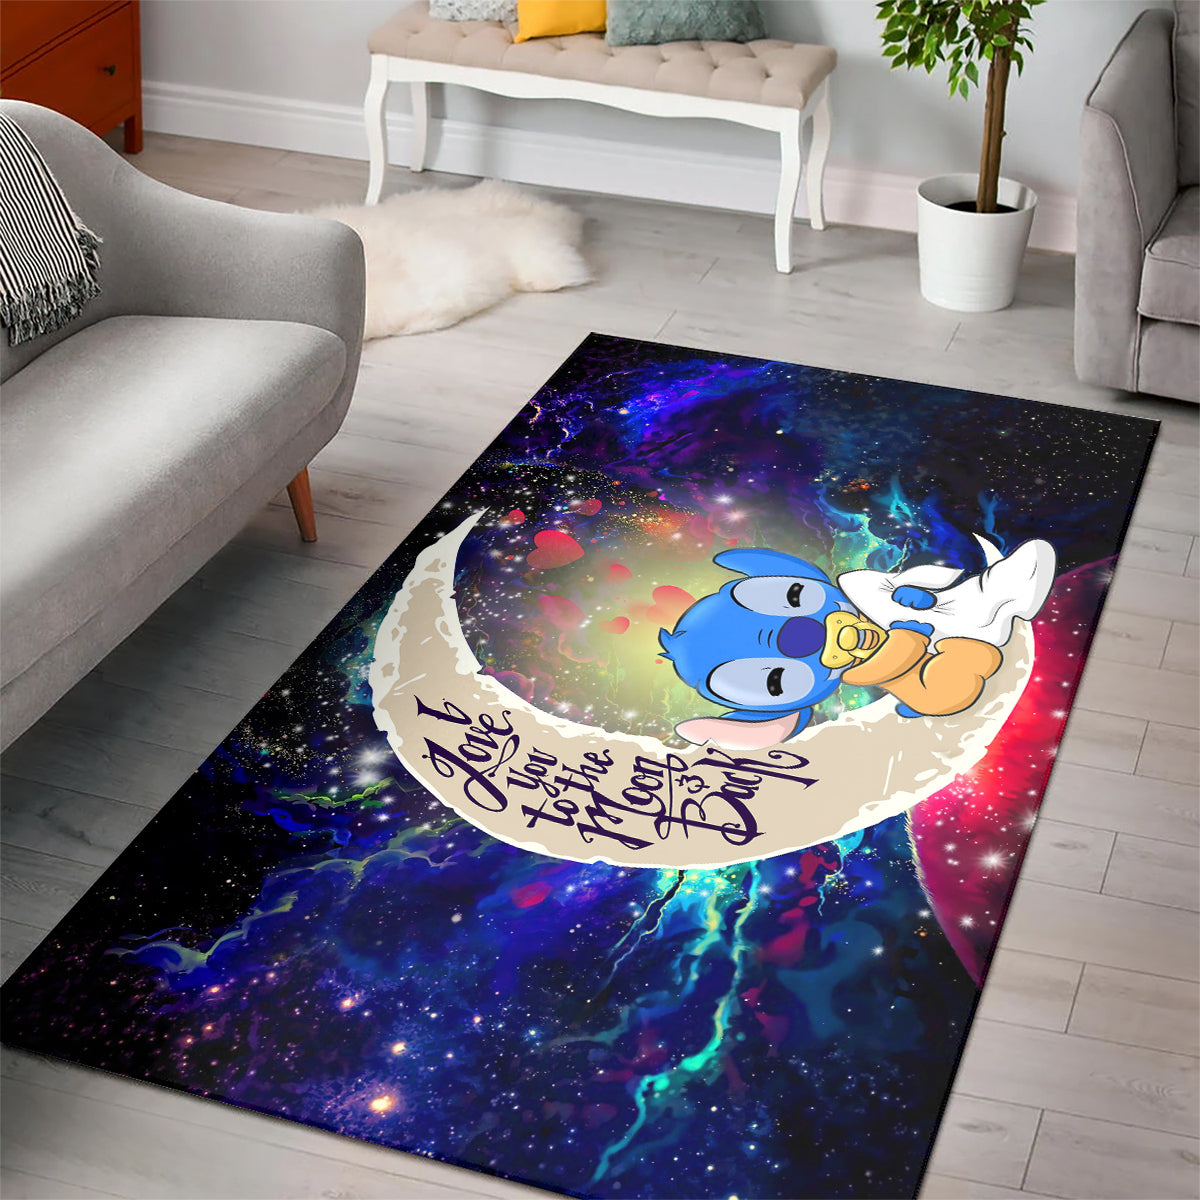 Cute Baby Stitch Sleep Love You To The Moon Galaxy Carpet Rug Home Room Decor